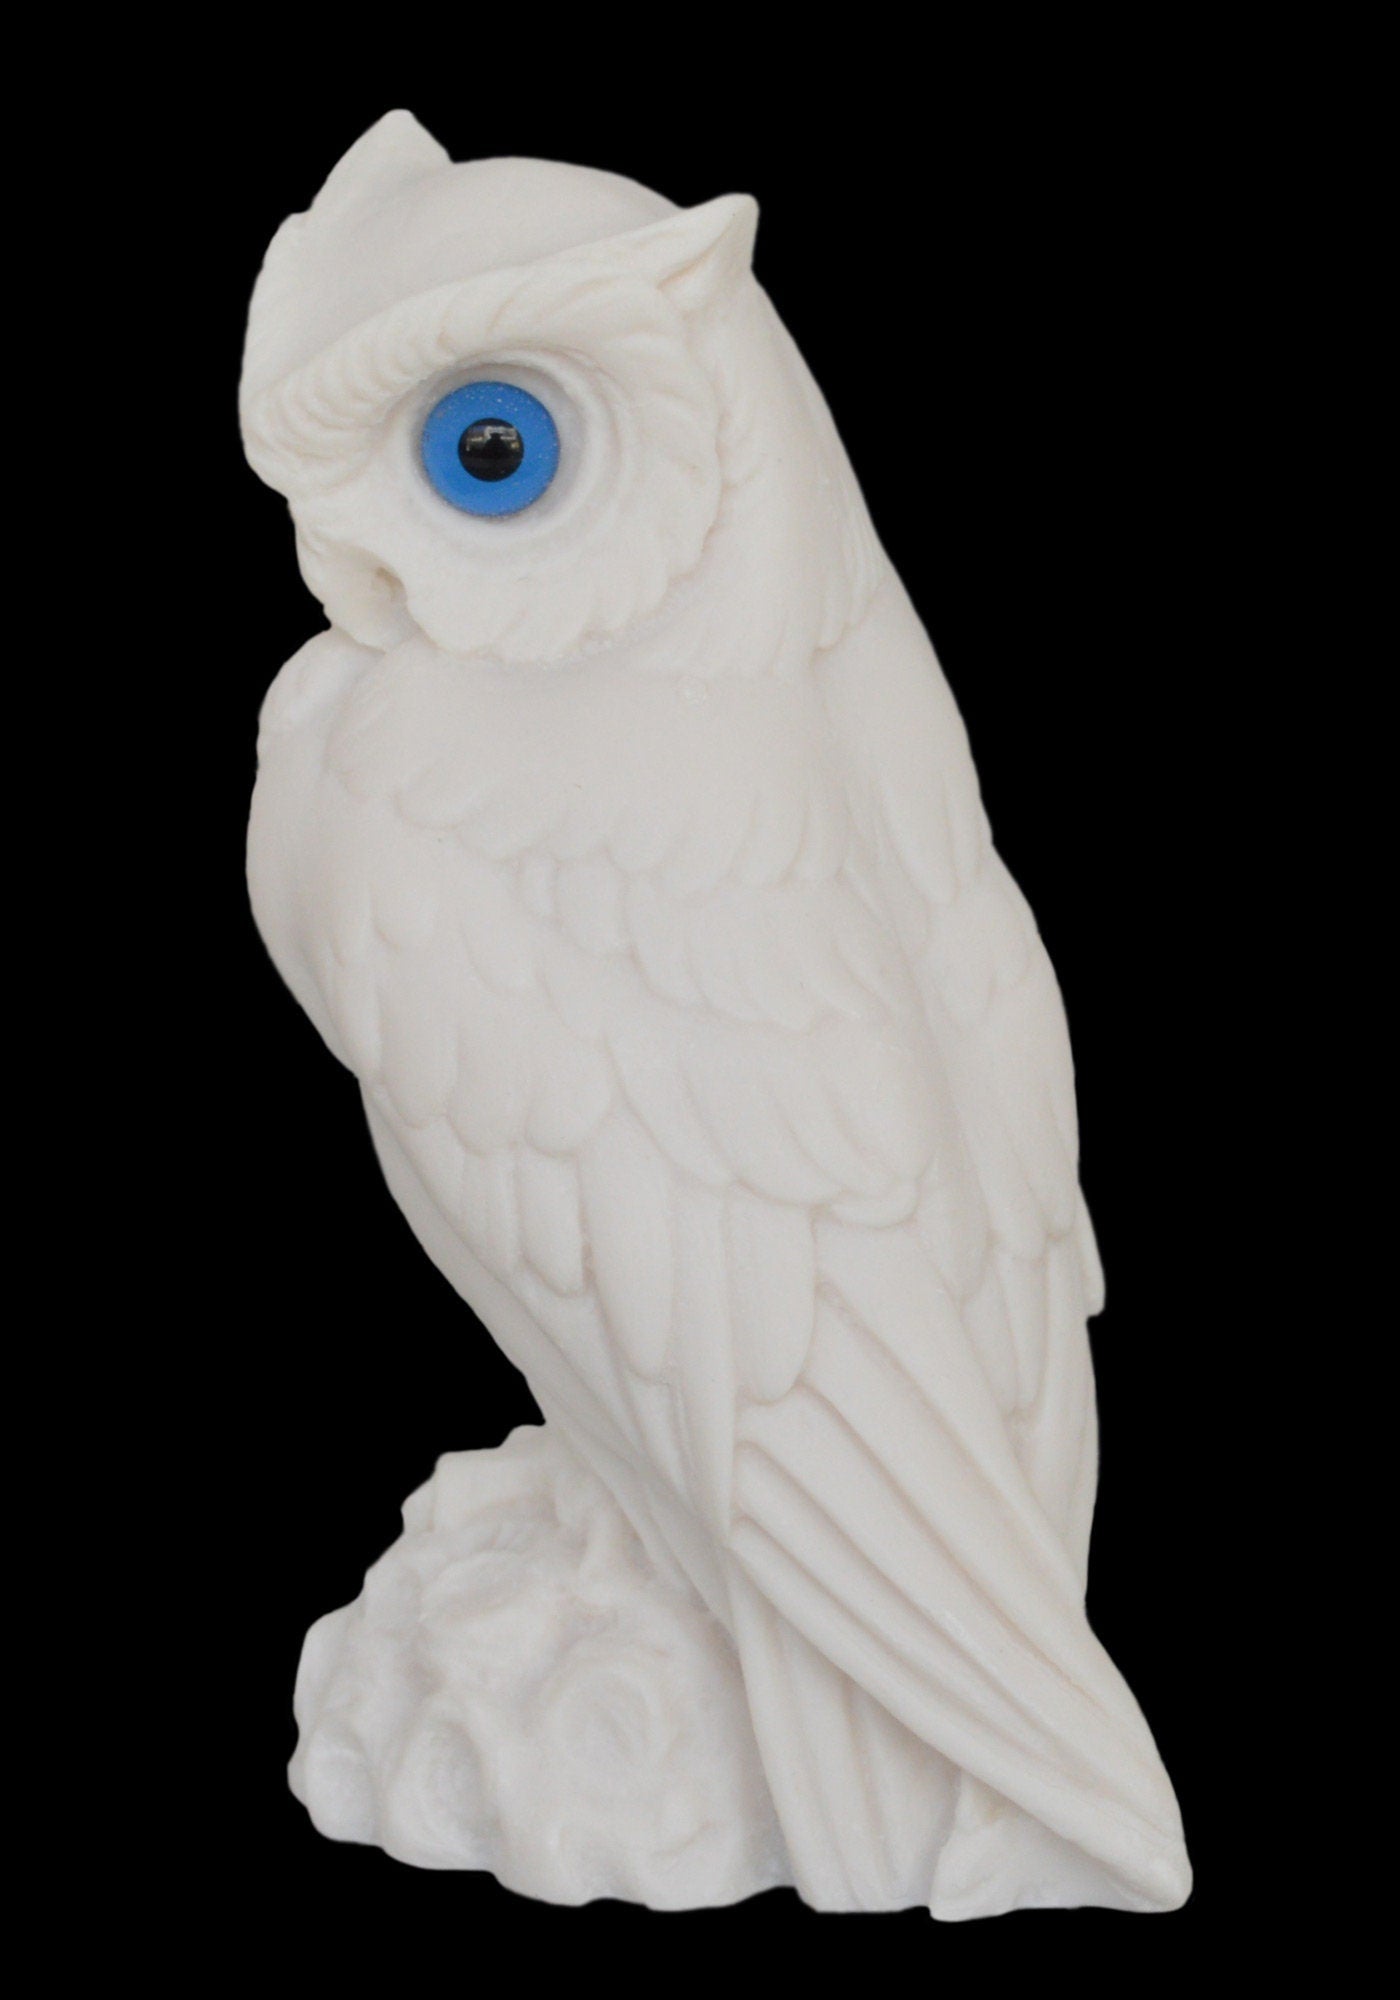 Owl Of Wisdom and Knowledge - Symbol of Goddess Athena Minerva - Ancient Greece - Alabaster Sculpture